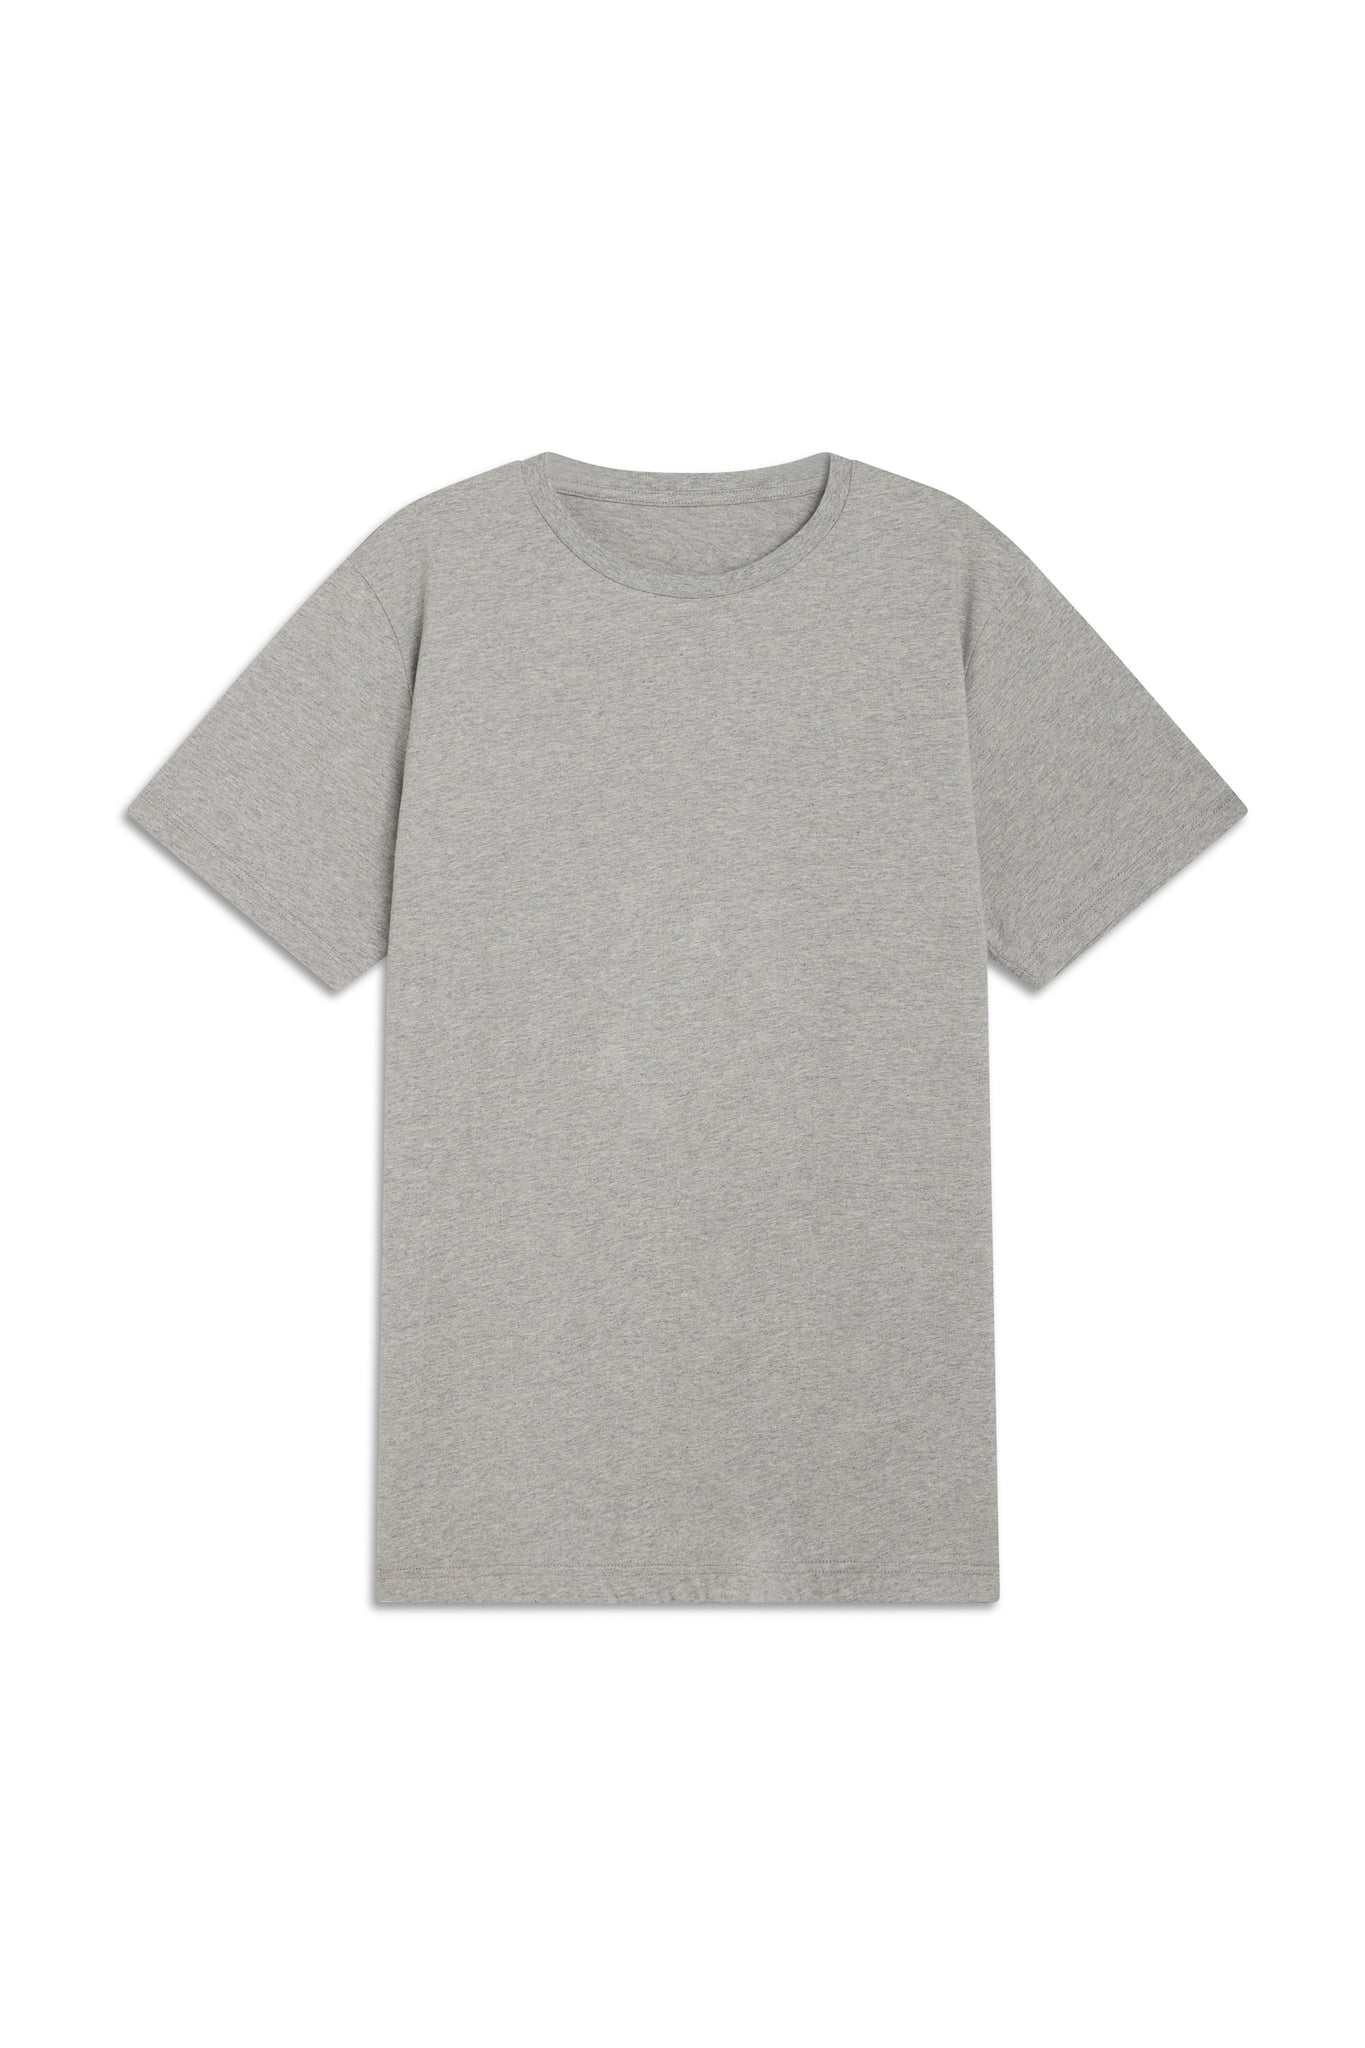 Premium T-Shirt - Grey